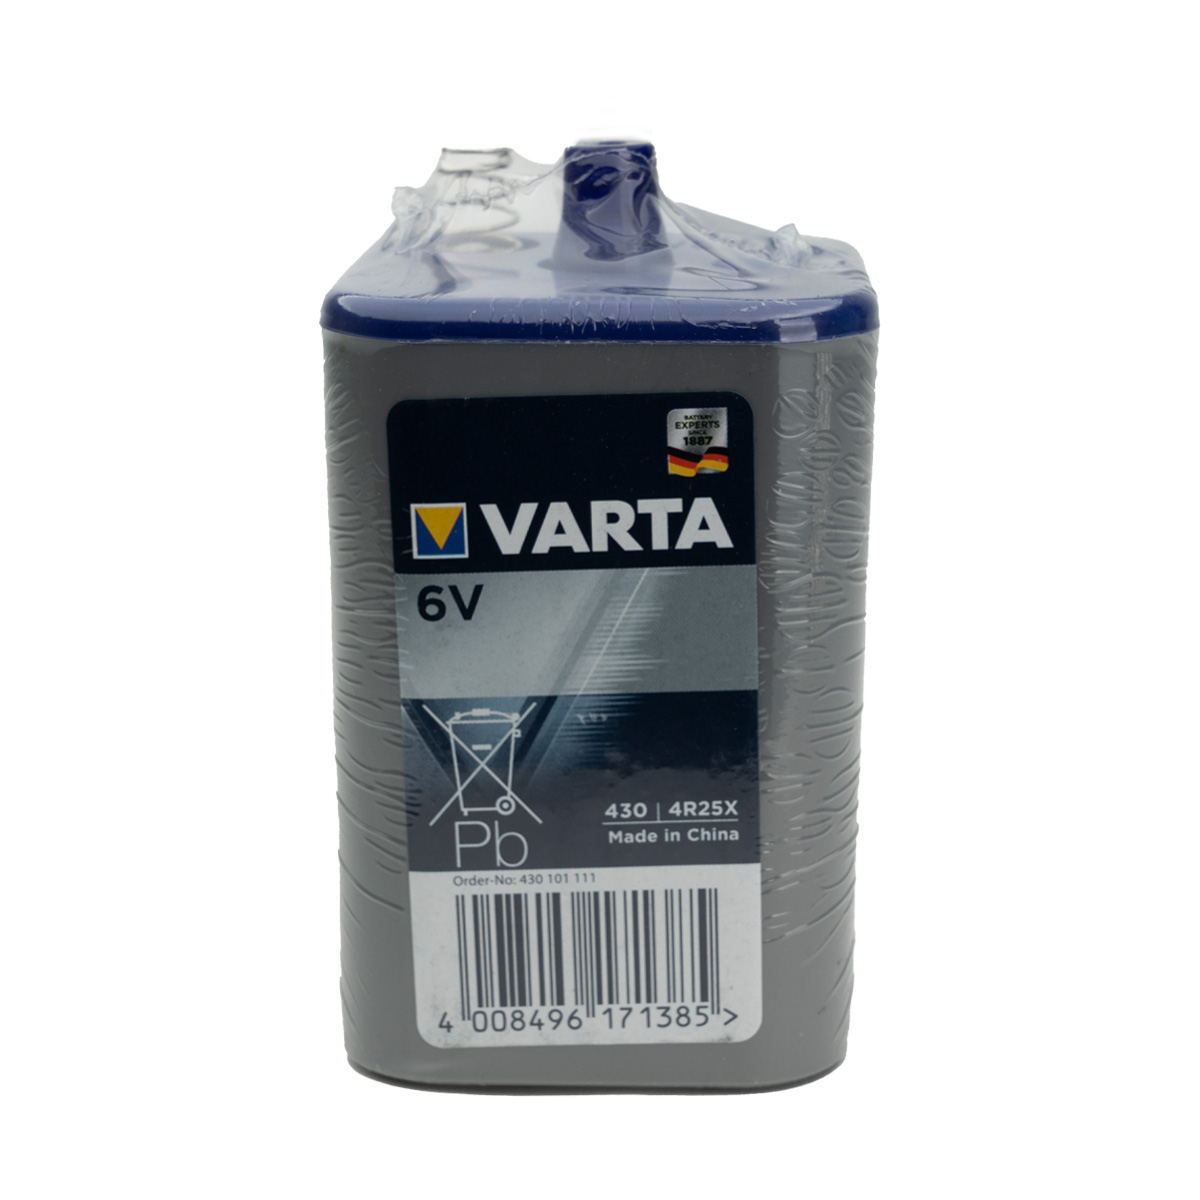 VARTA Professional 431 4R25X 6V Blockbatterie Motor 8,5Ah Zink